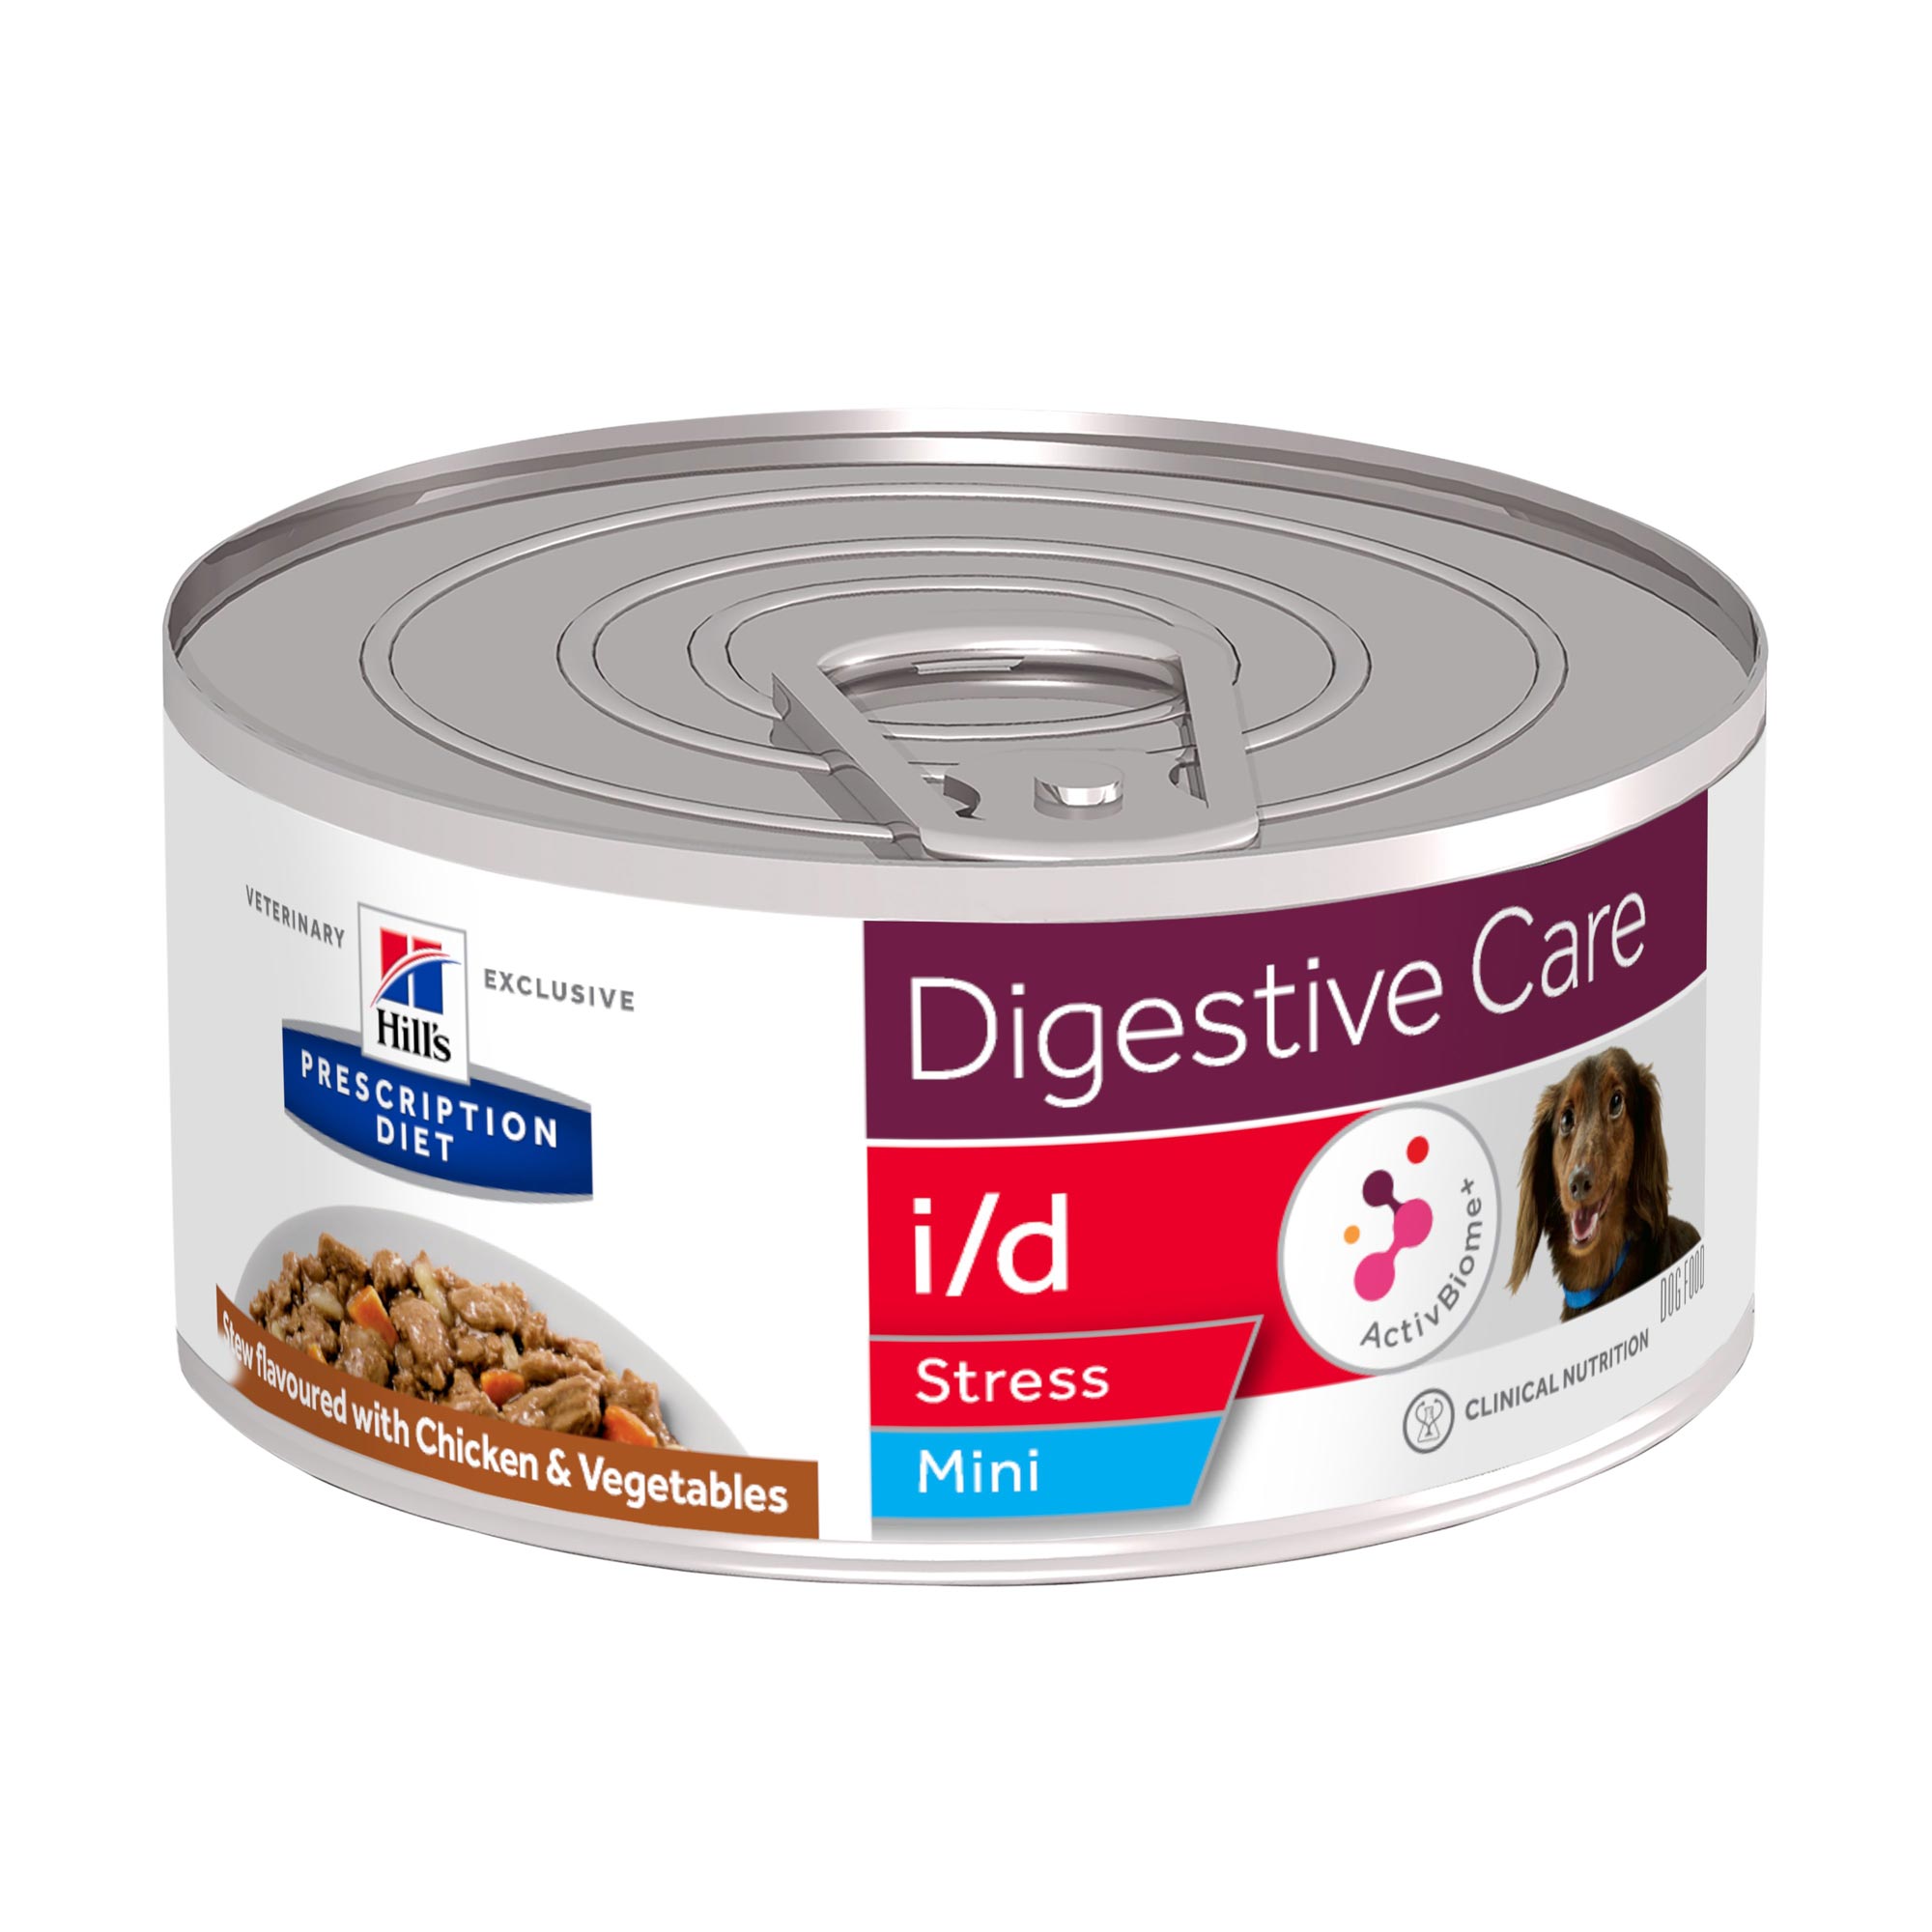 Hill's Prescription Diet Digestive Care i/d Stress Stoofpotje Hond - blik 24x156g